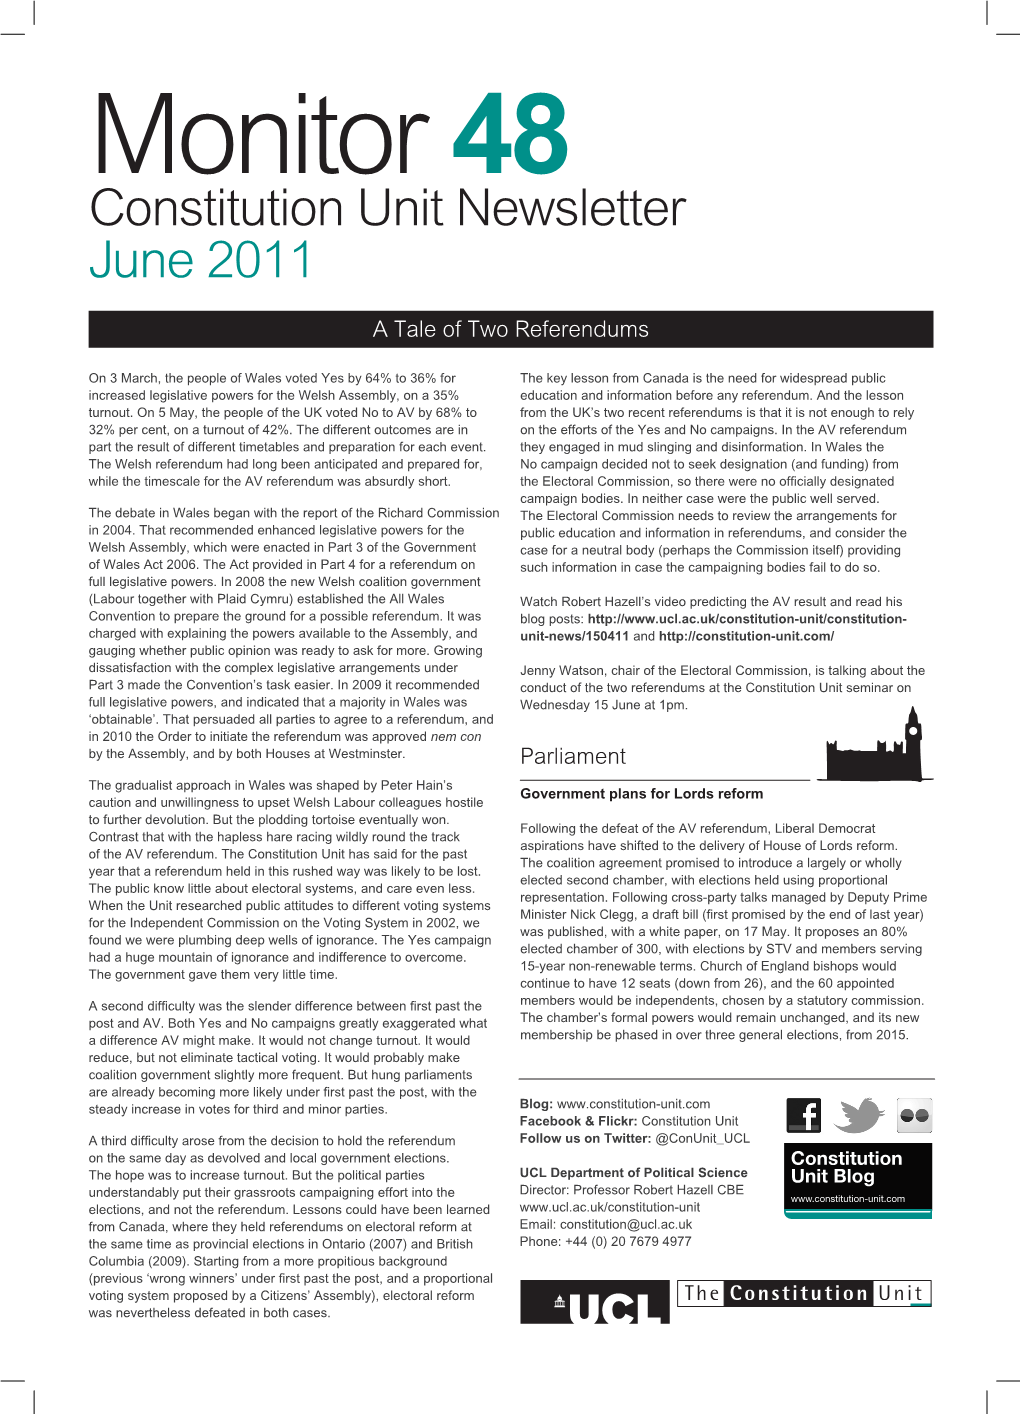 Monitor 48 Constitution Unit Newsletter June 2011